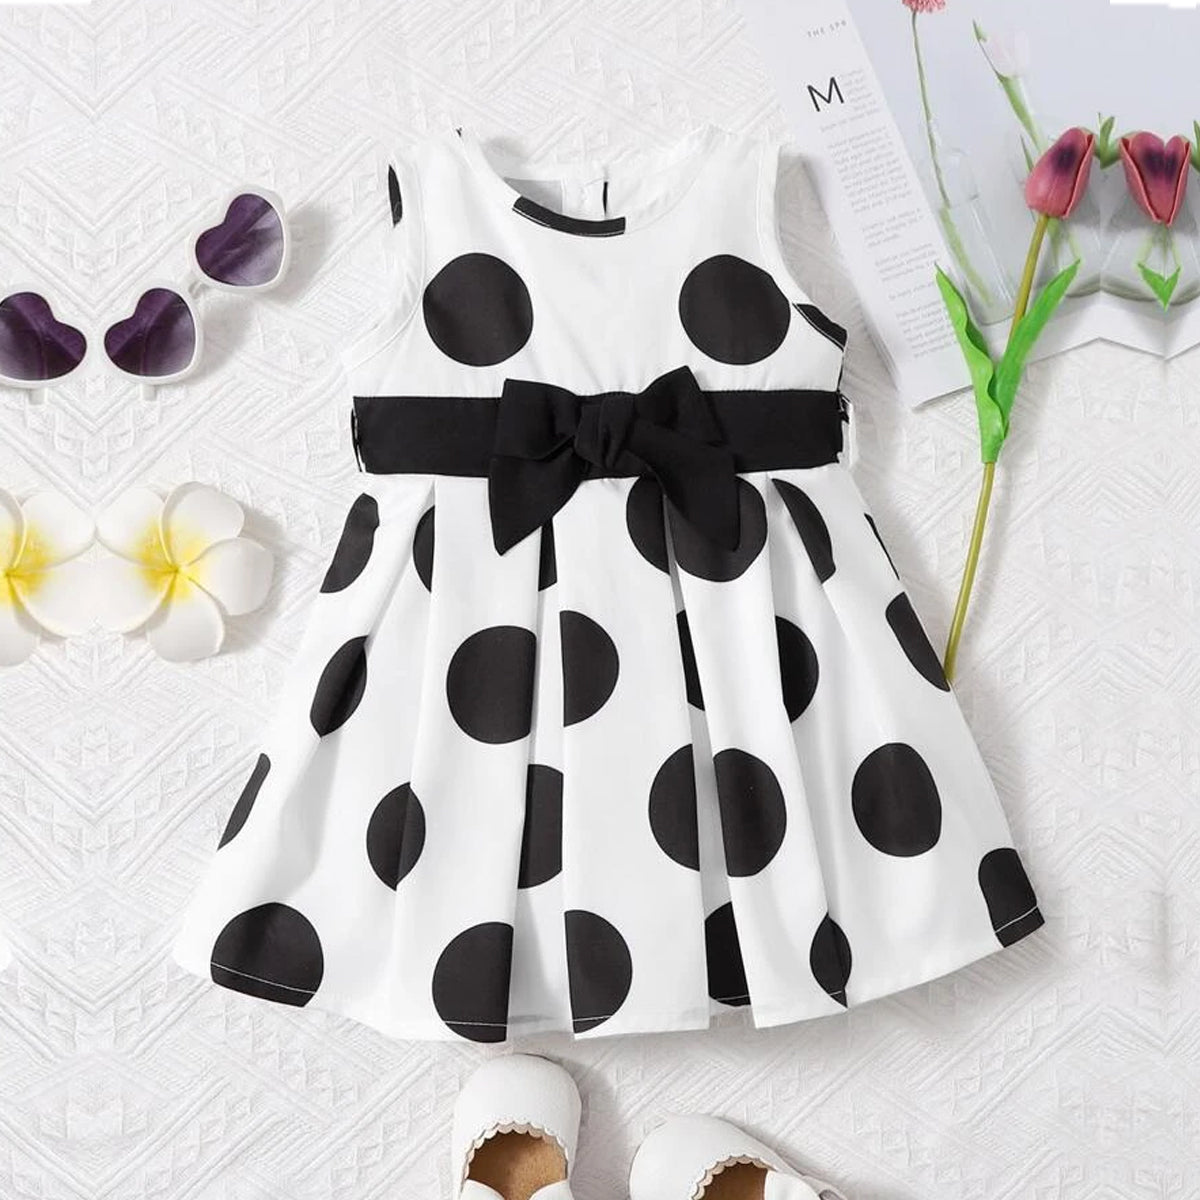 Venutaloza Stylish Black Round Designer Frocks & Dresses for Baby Girl.